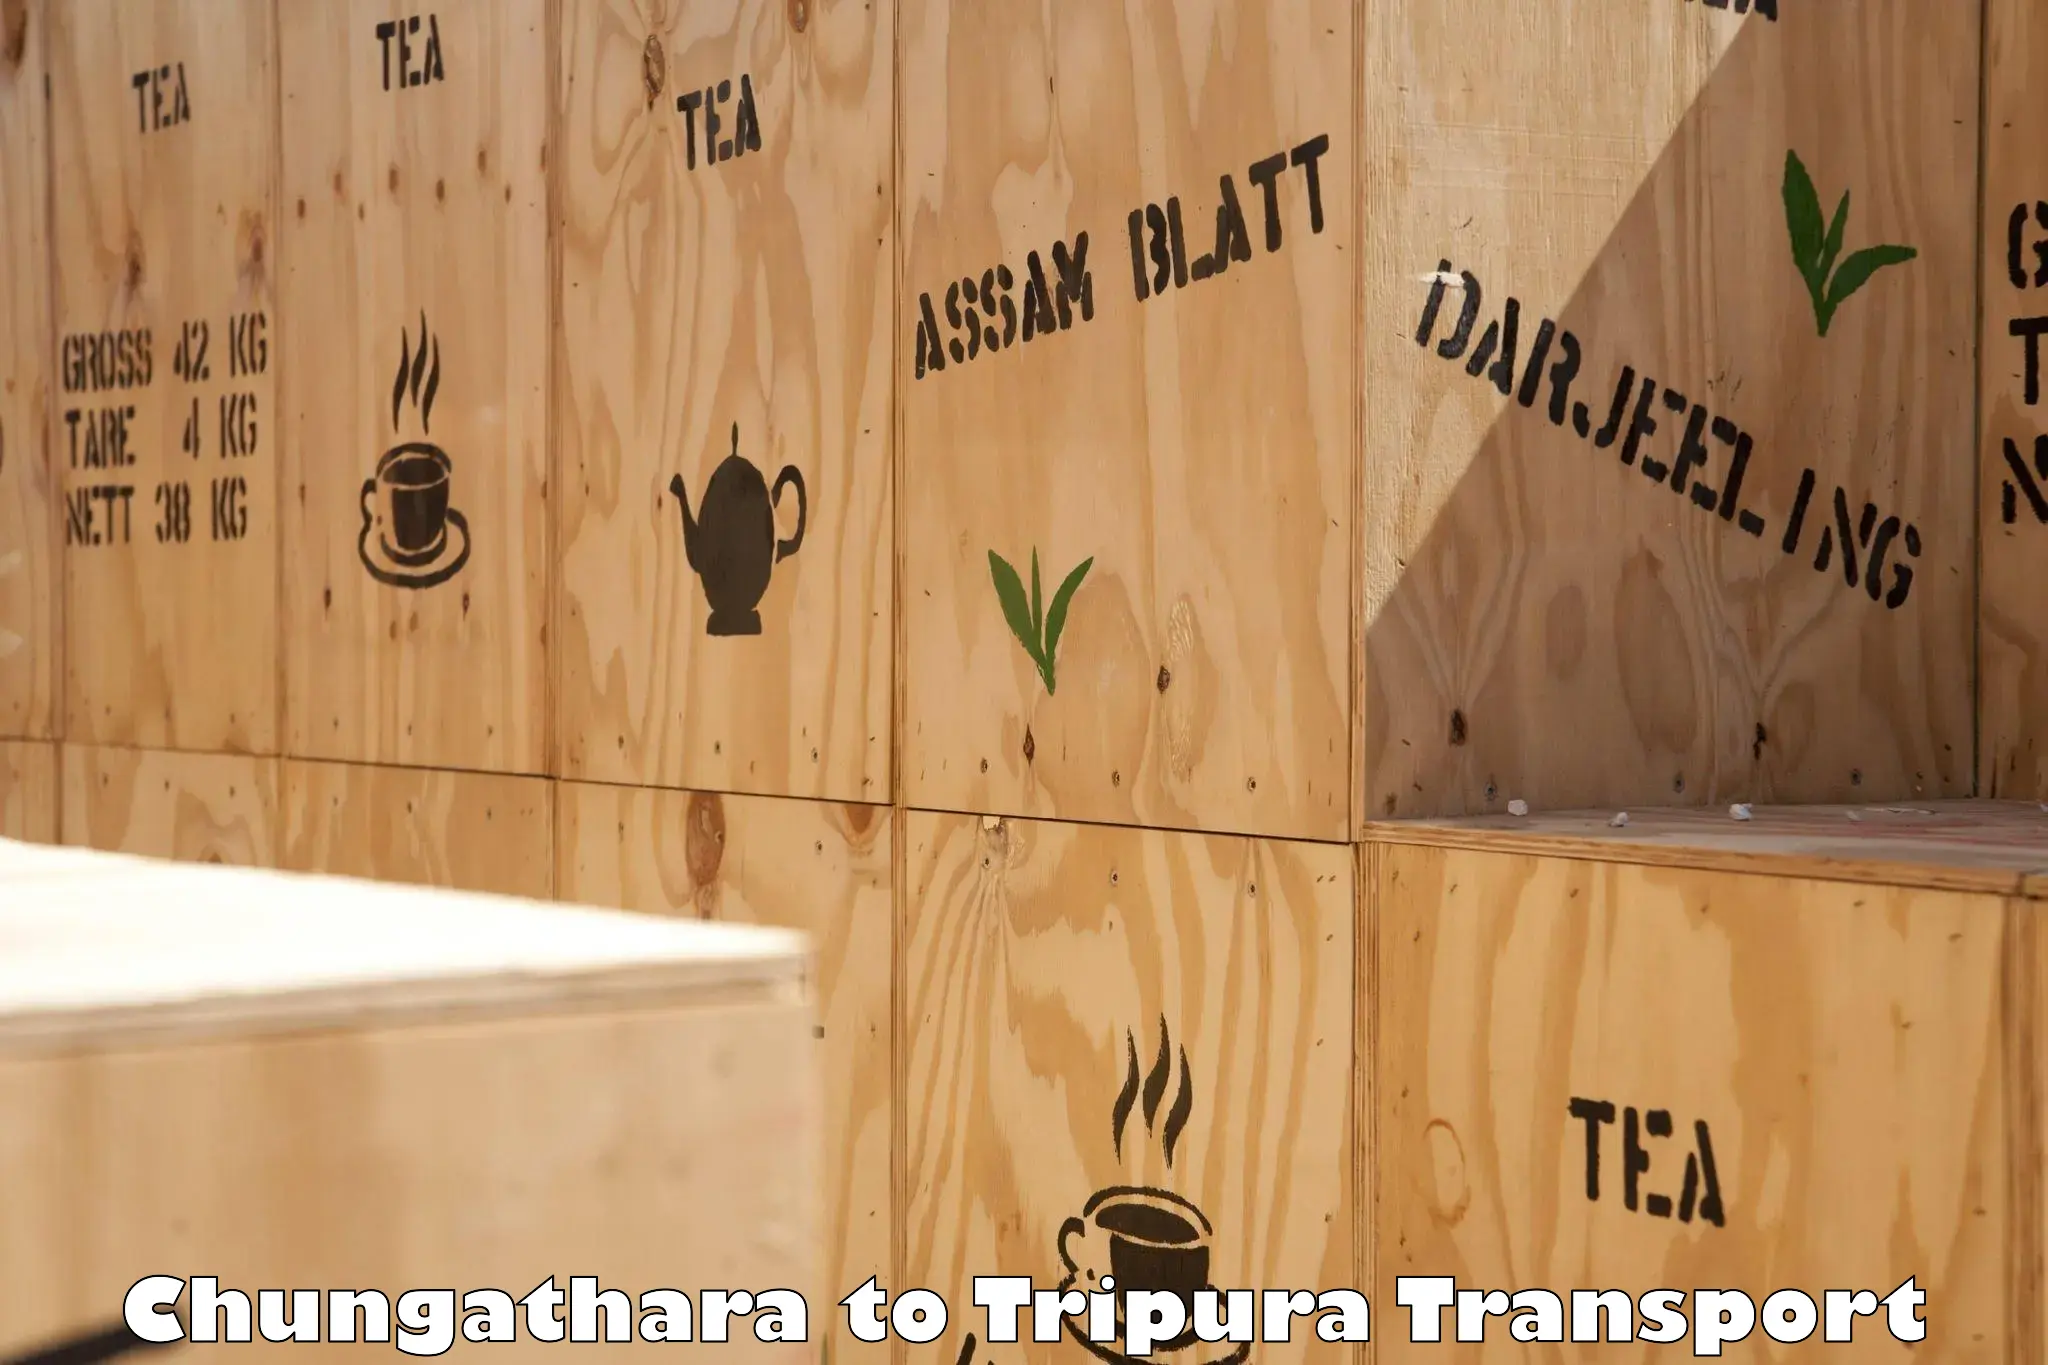 Transport in sharing Chungathara to Khowai